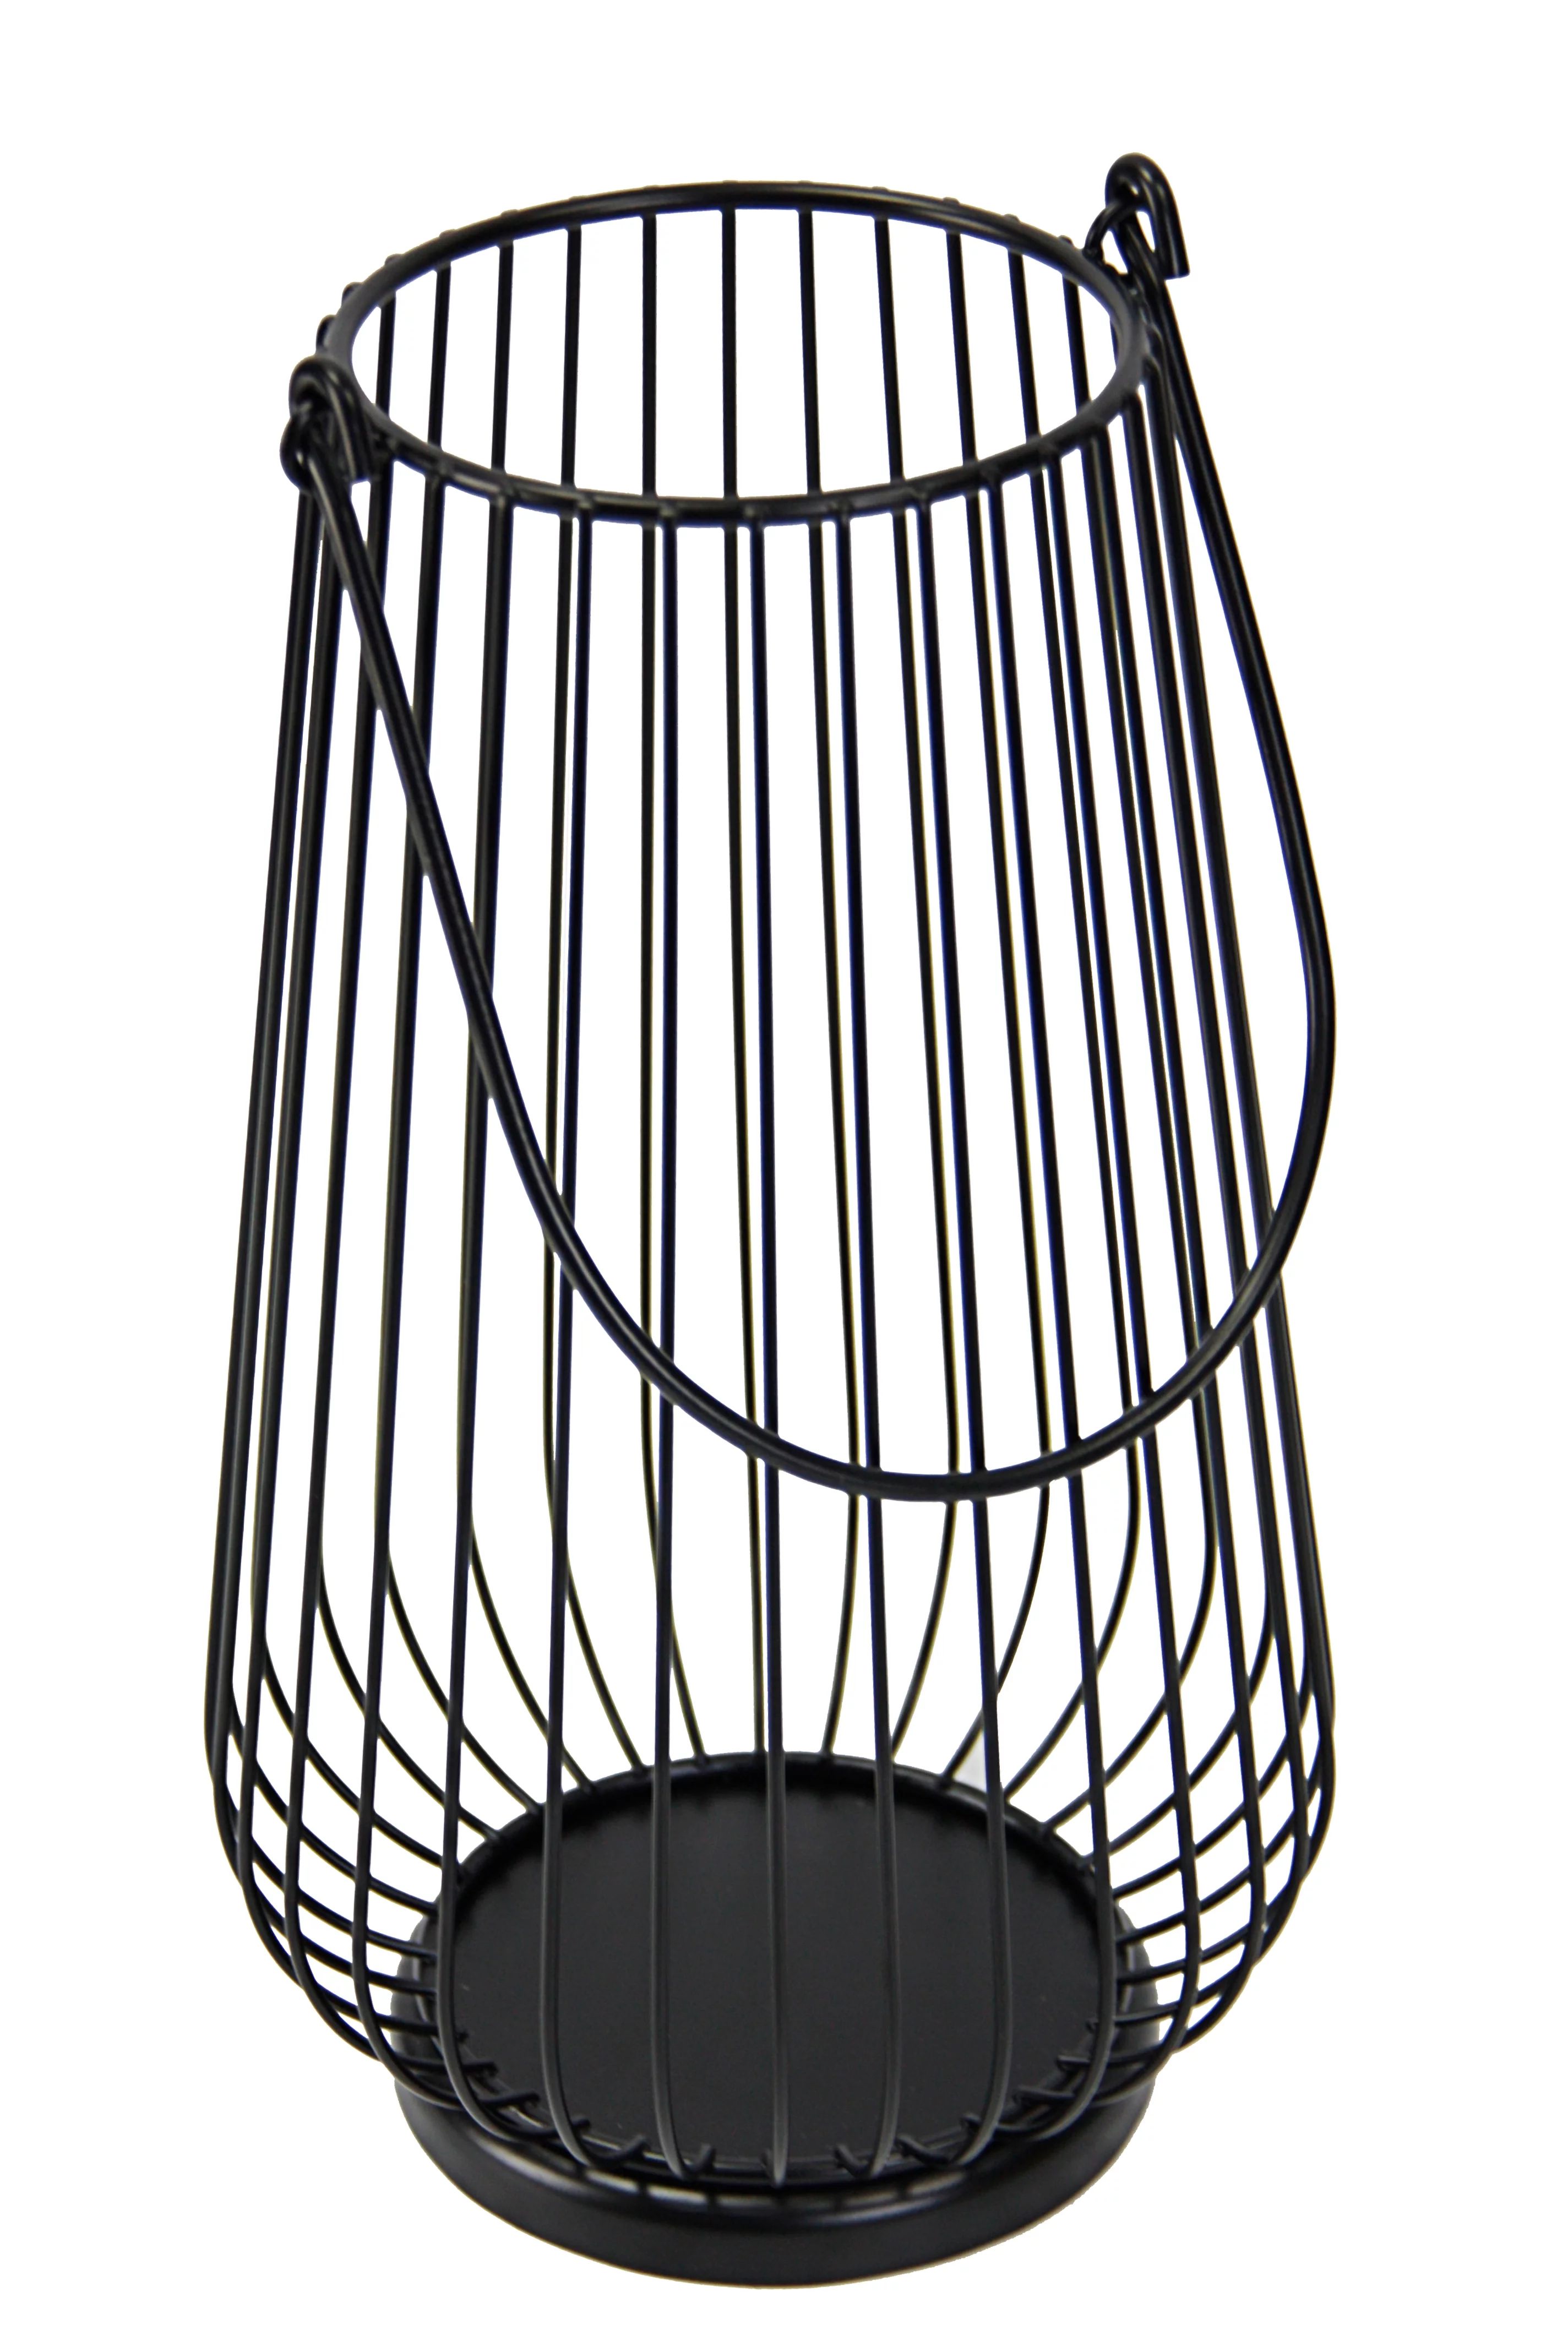 Mainstays 12" Metal Wire Candle Holder Lantern, Black | Walmart (US)